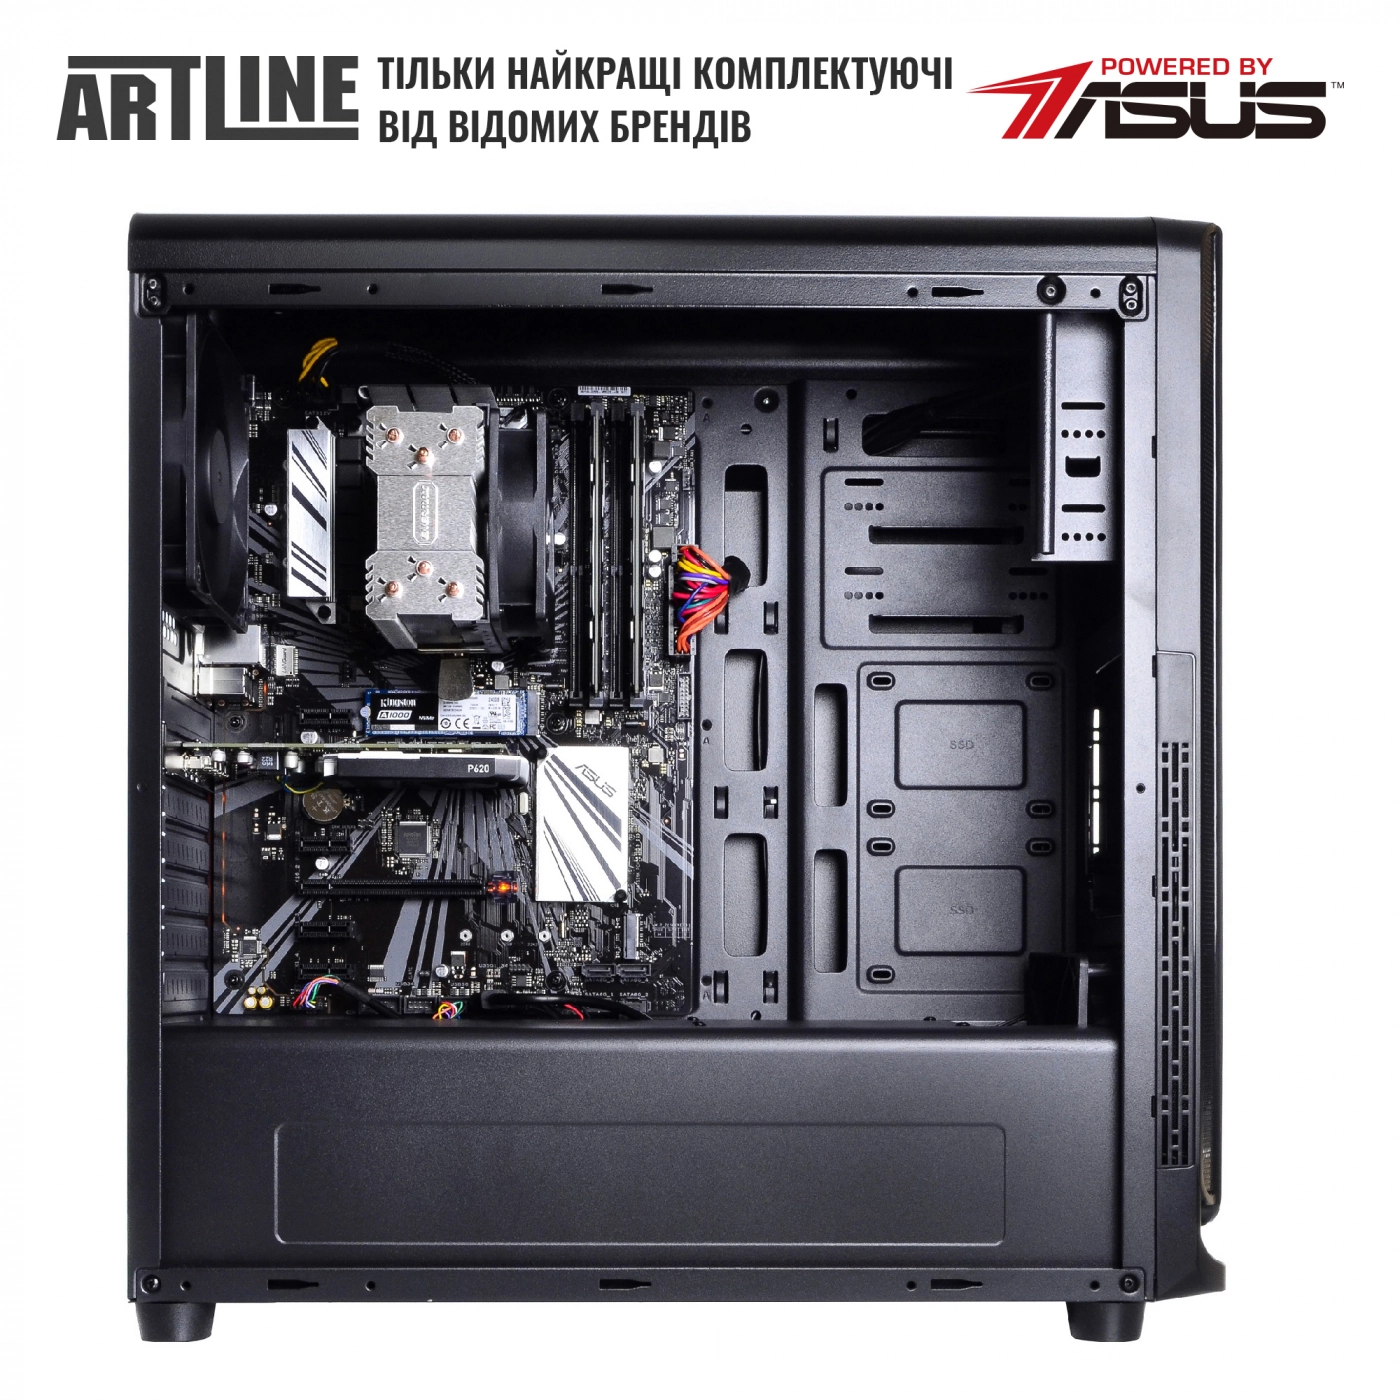 Купити Сервер ARTLINE Business T19v18 - фото 5